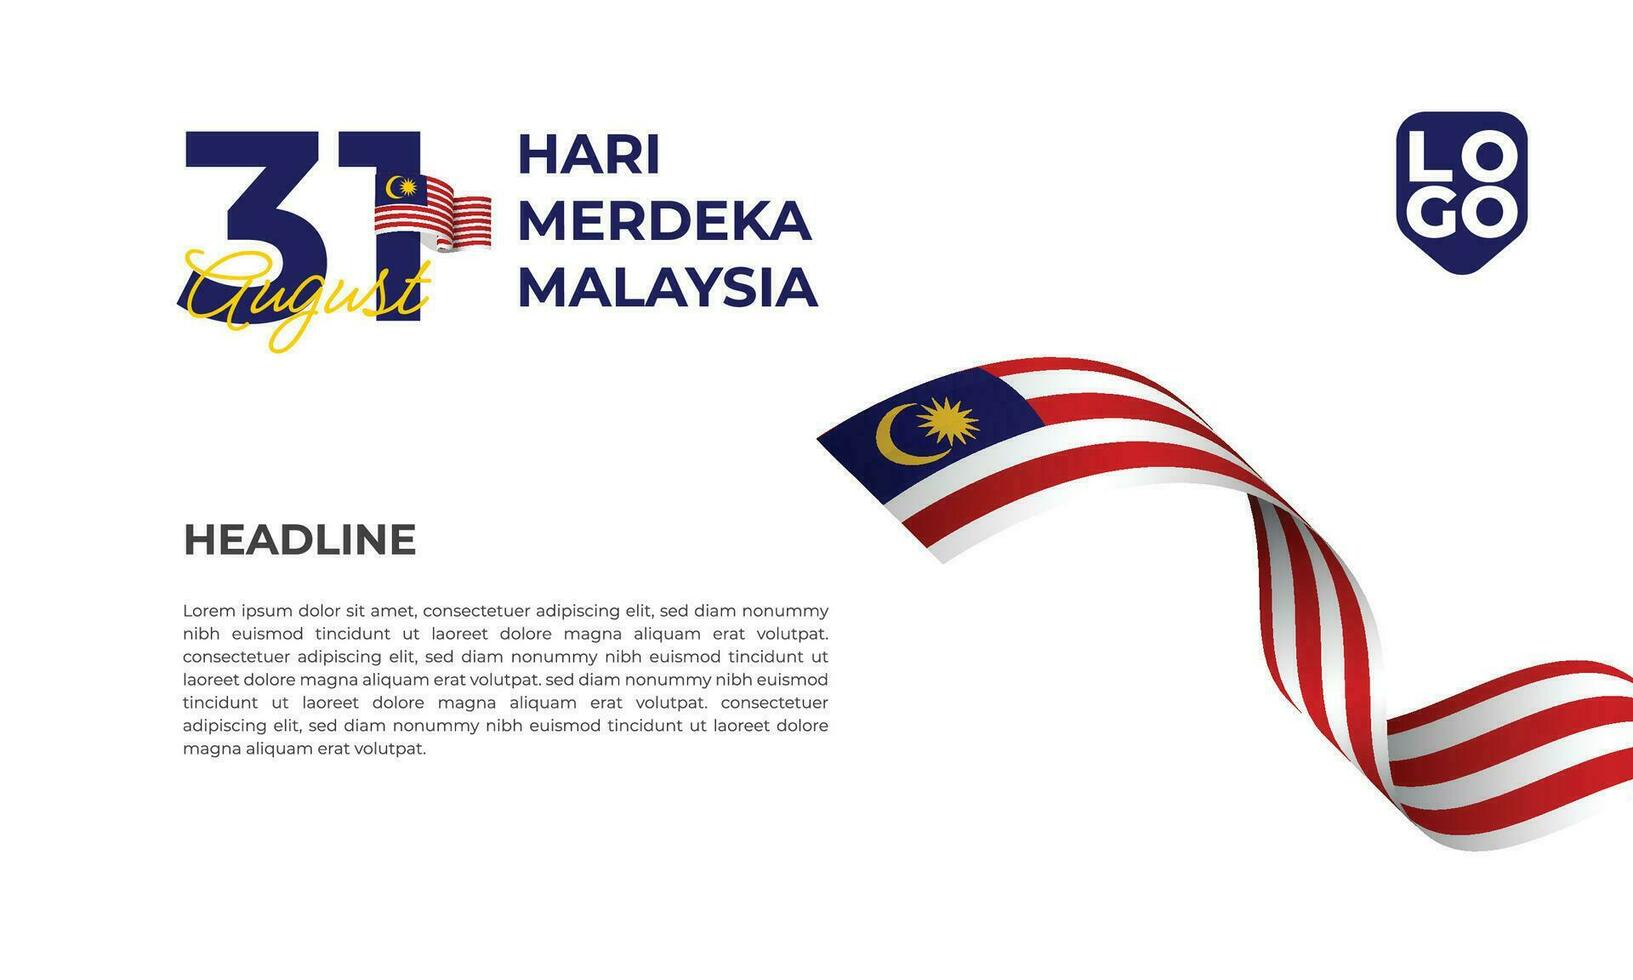 Malásia independência dia Projeto modelo vetor